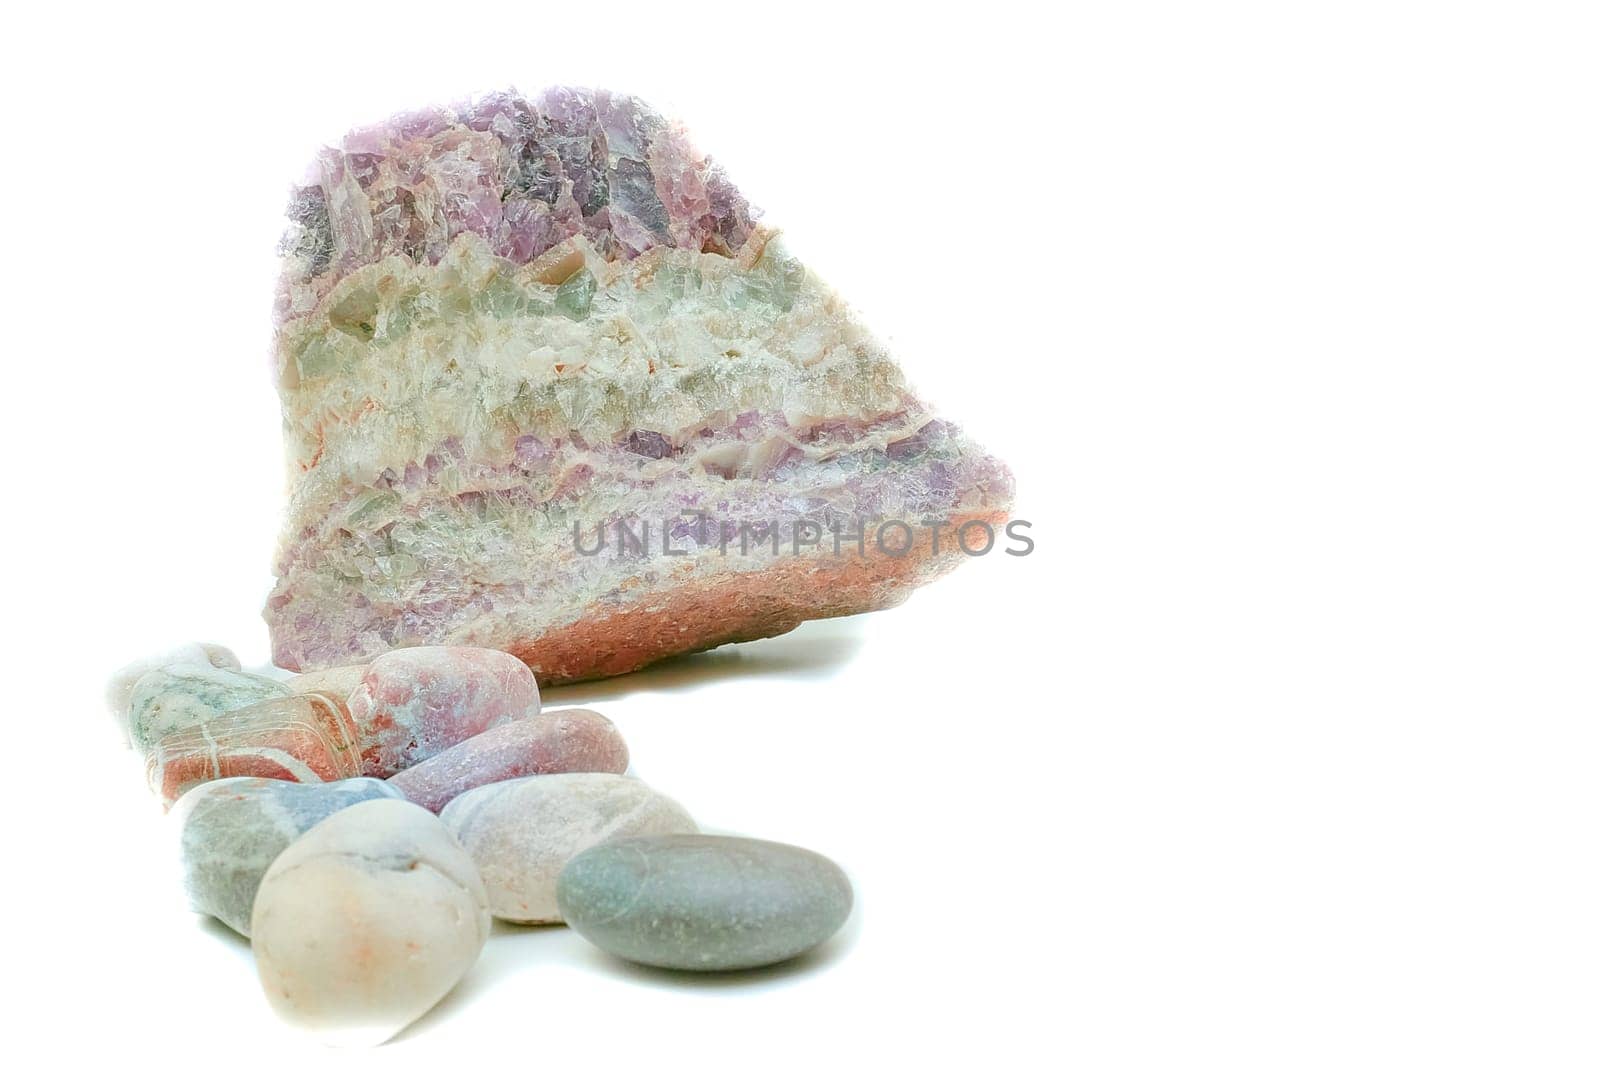 Multicolored layered quartz and sea pebble stones on white by jovani68